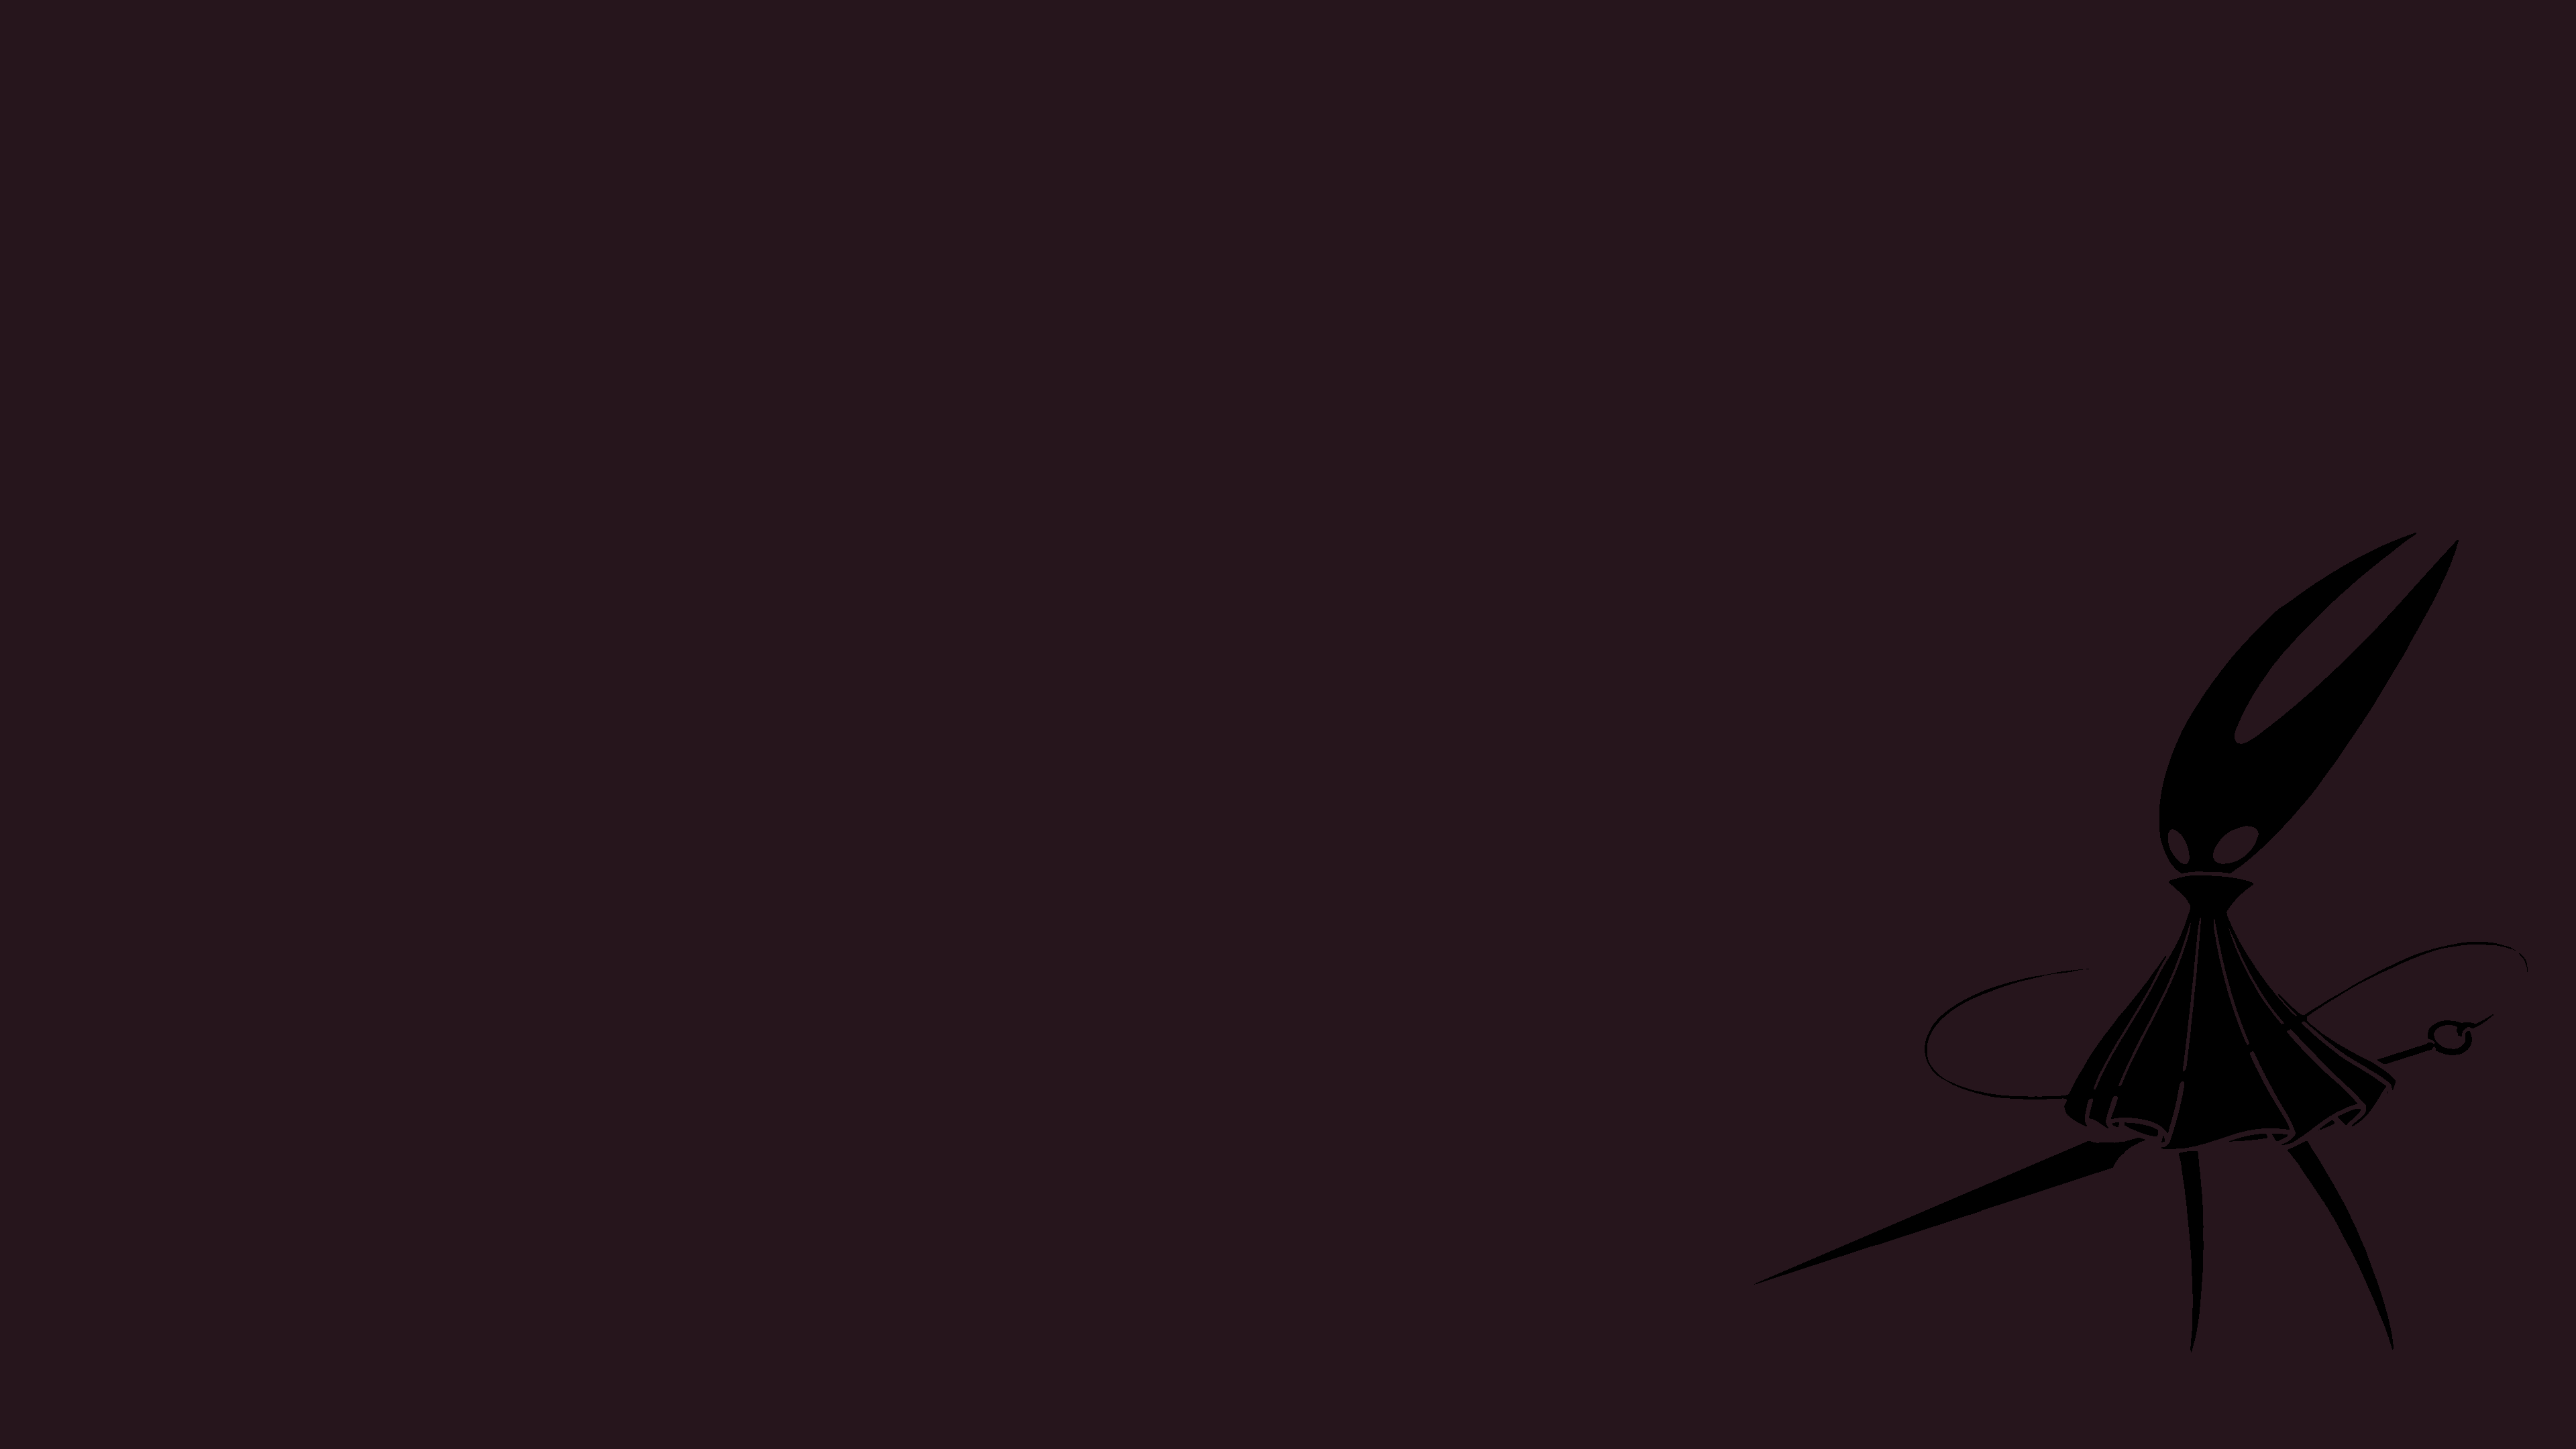 x 2160) Some minimalist Hollow Knight desktop background I